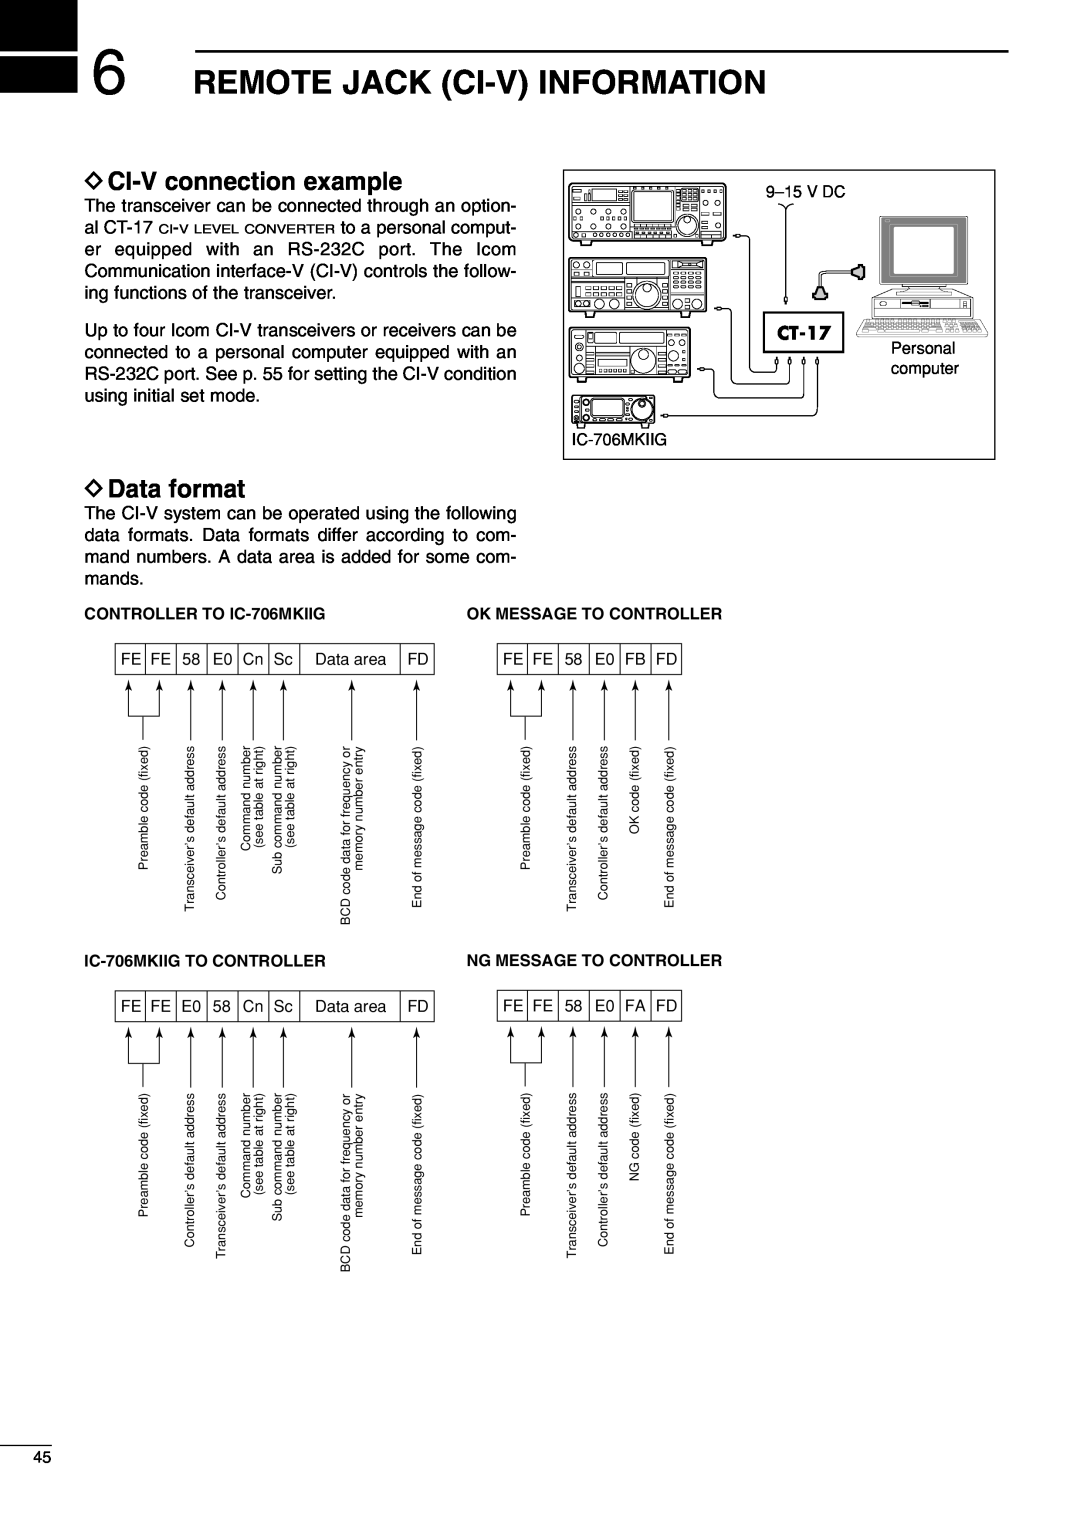 Icom IC-706MKIIG, I706MKTMG instruction manual Remote Jack Ci-Vinformation, DCI-Vconnection example, DData format, CT-17 